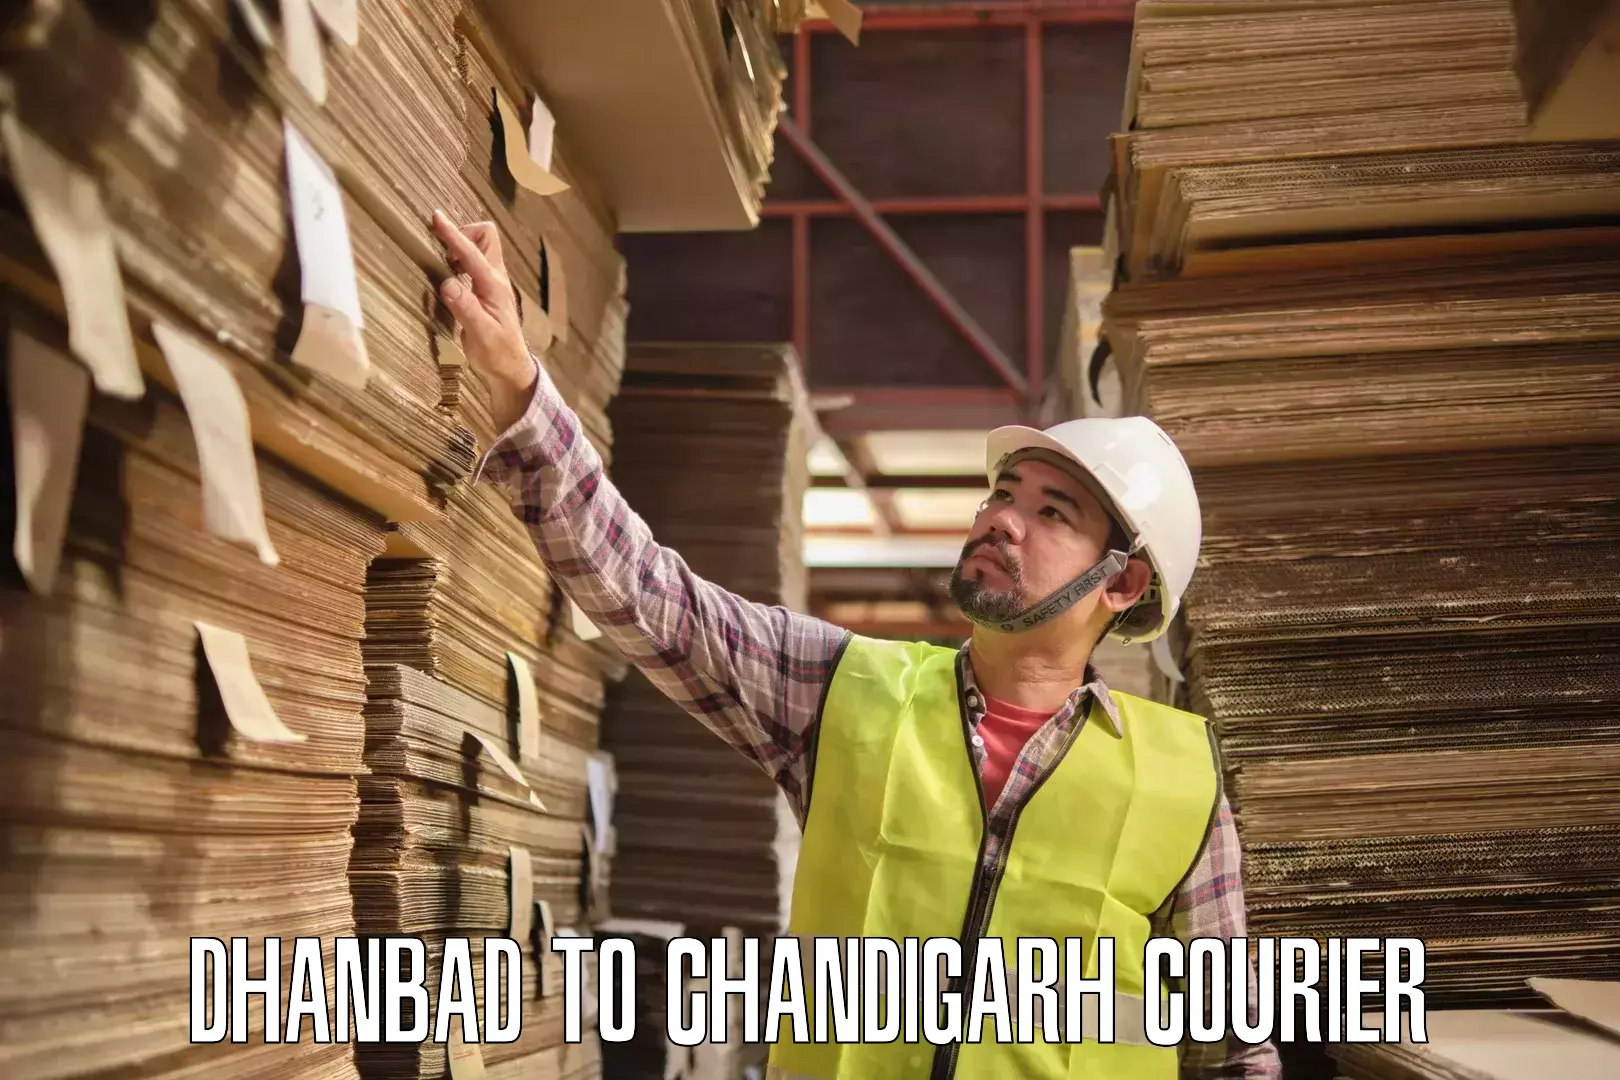 Courier service comparison Dhanbad to Chandigarh